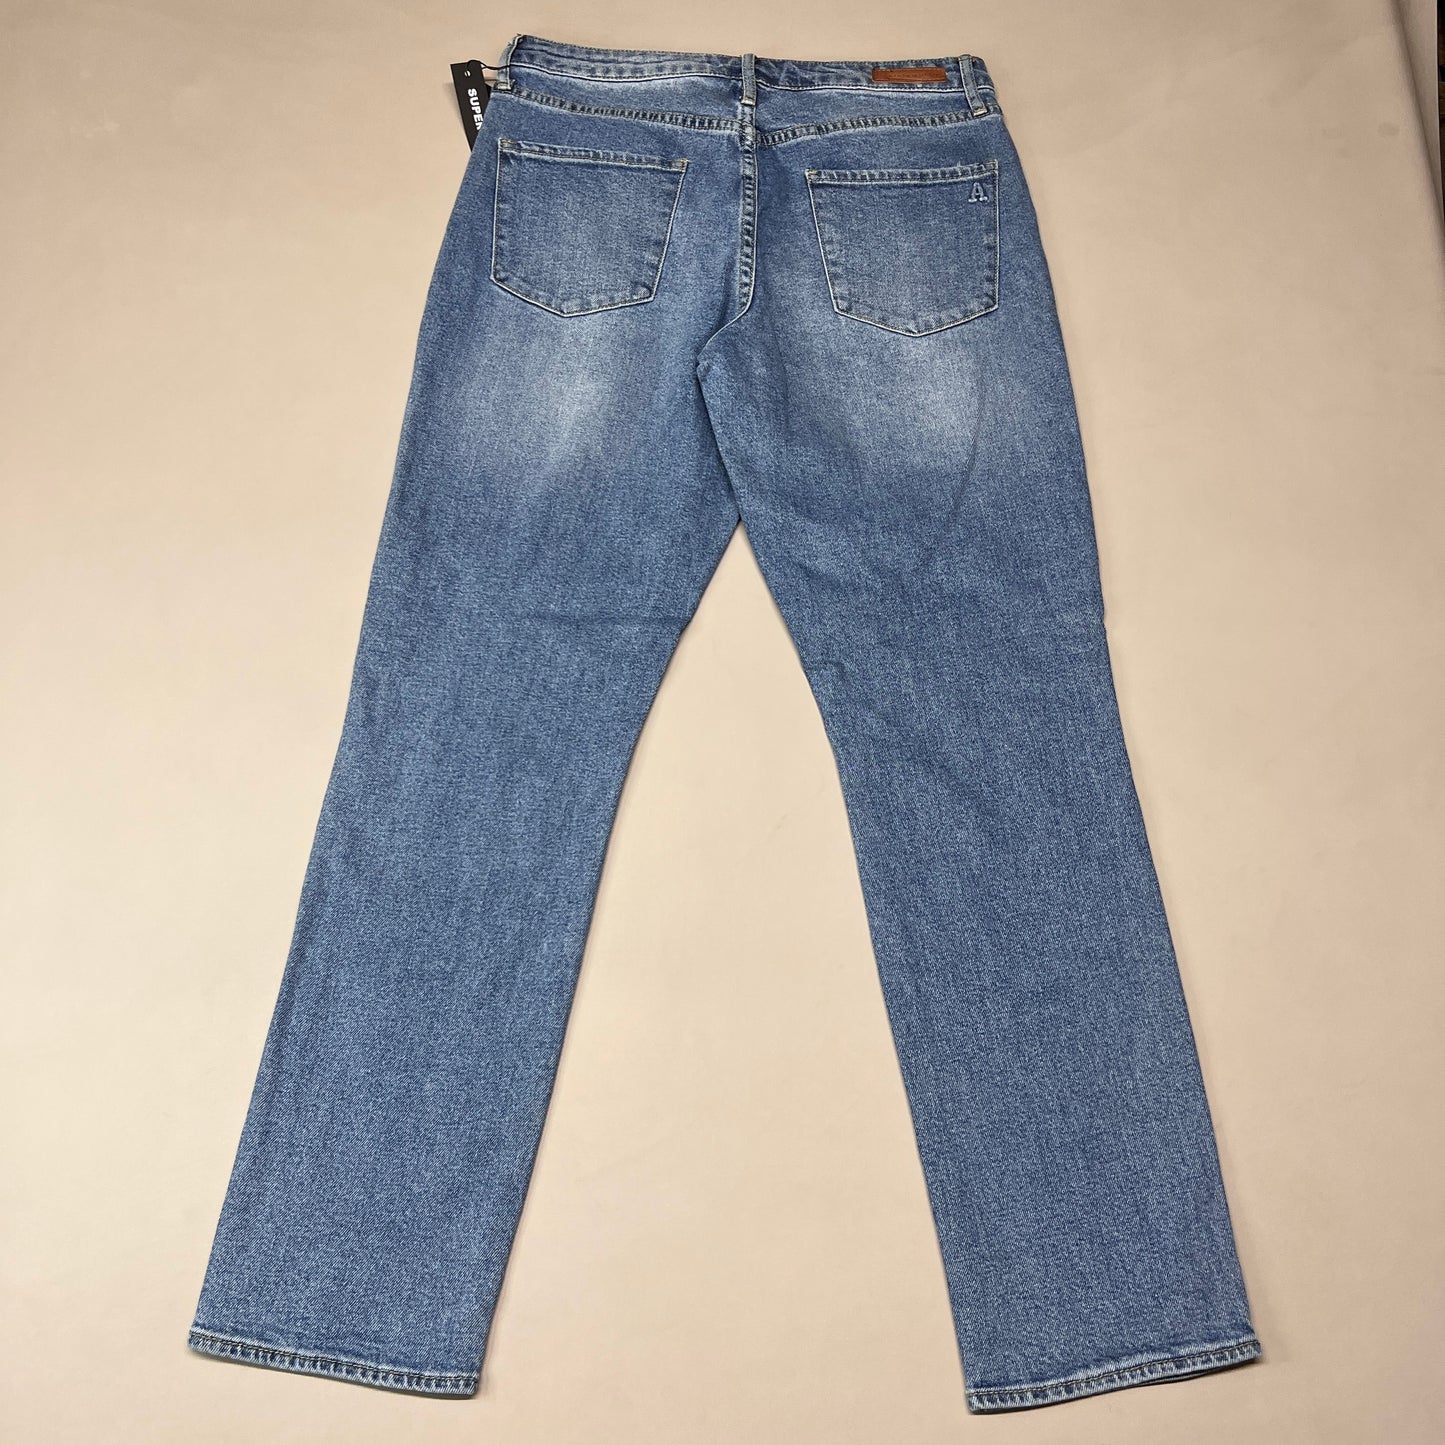 ARTICLES OF SOCIETY OMAO High Rise Denim Jeans Women's Sz 28 Blue 4009TQ3-716 (New)